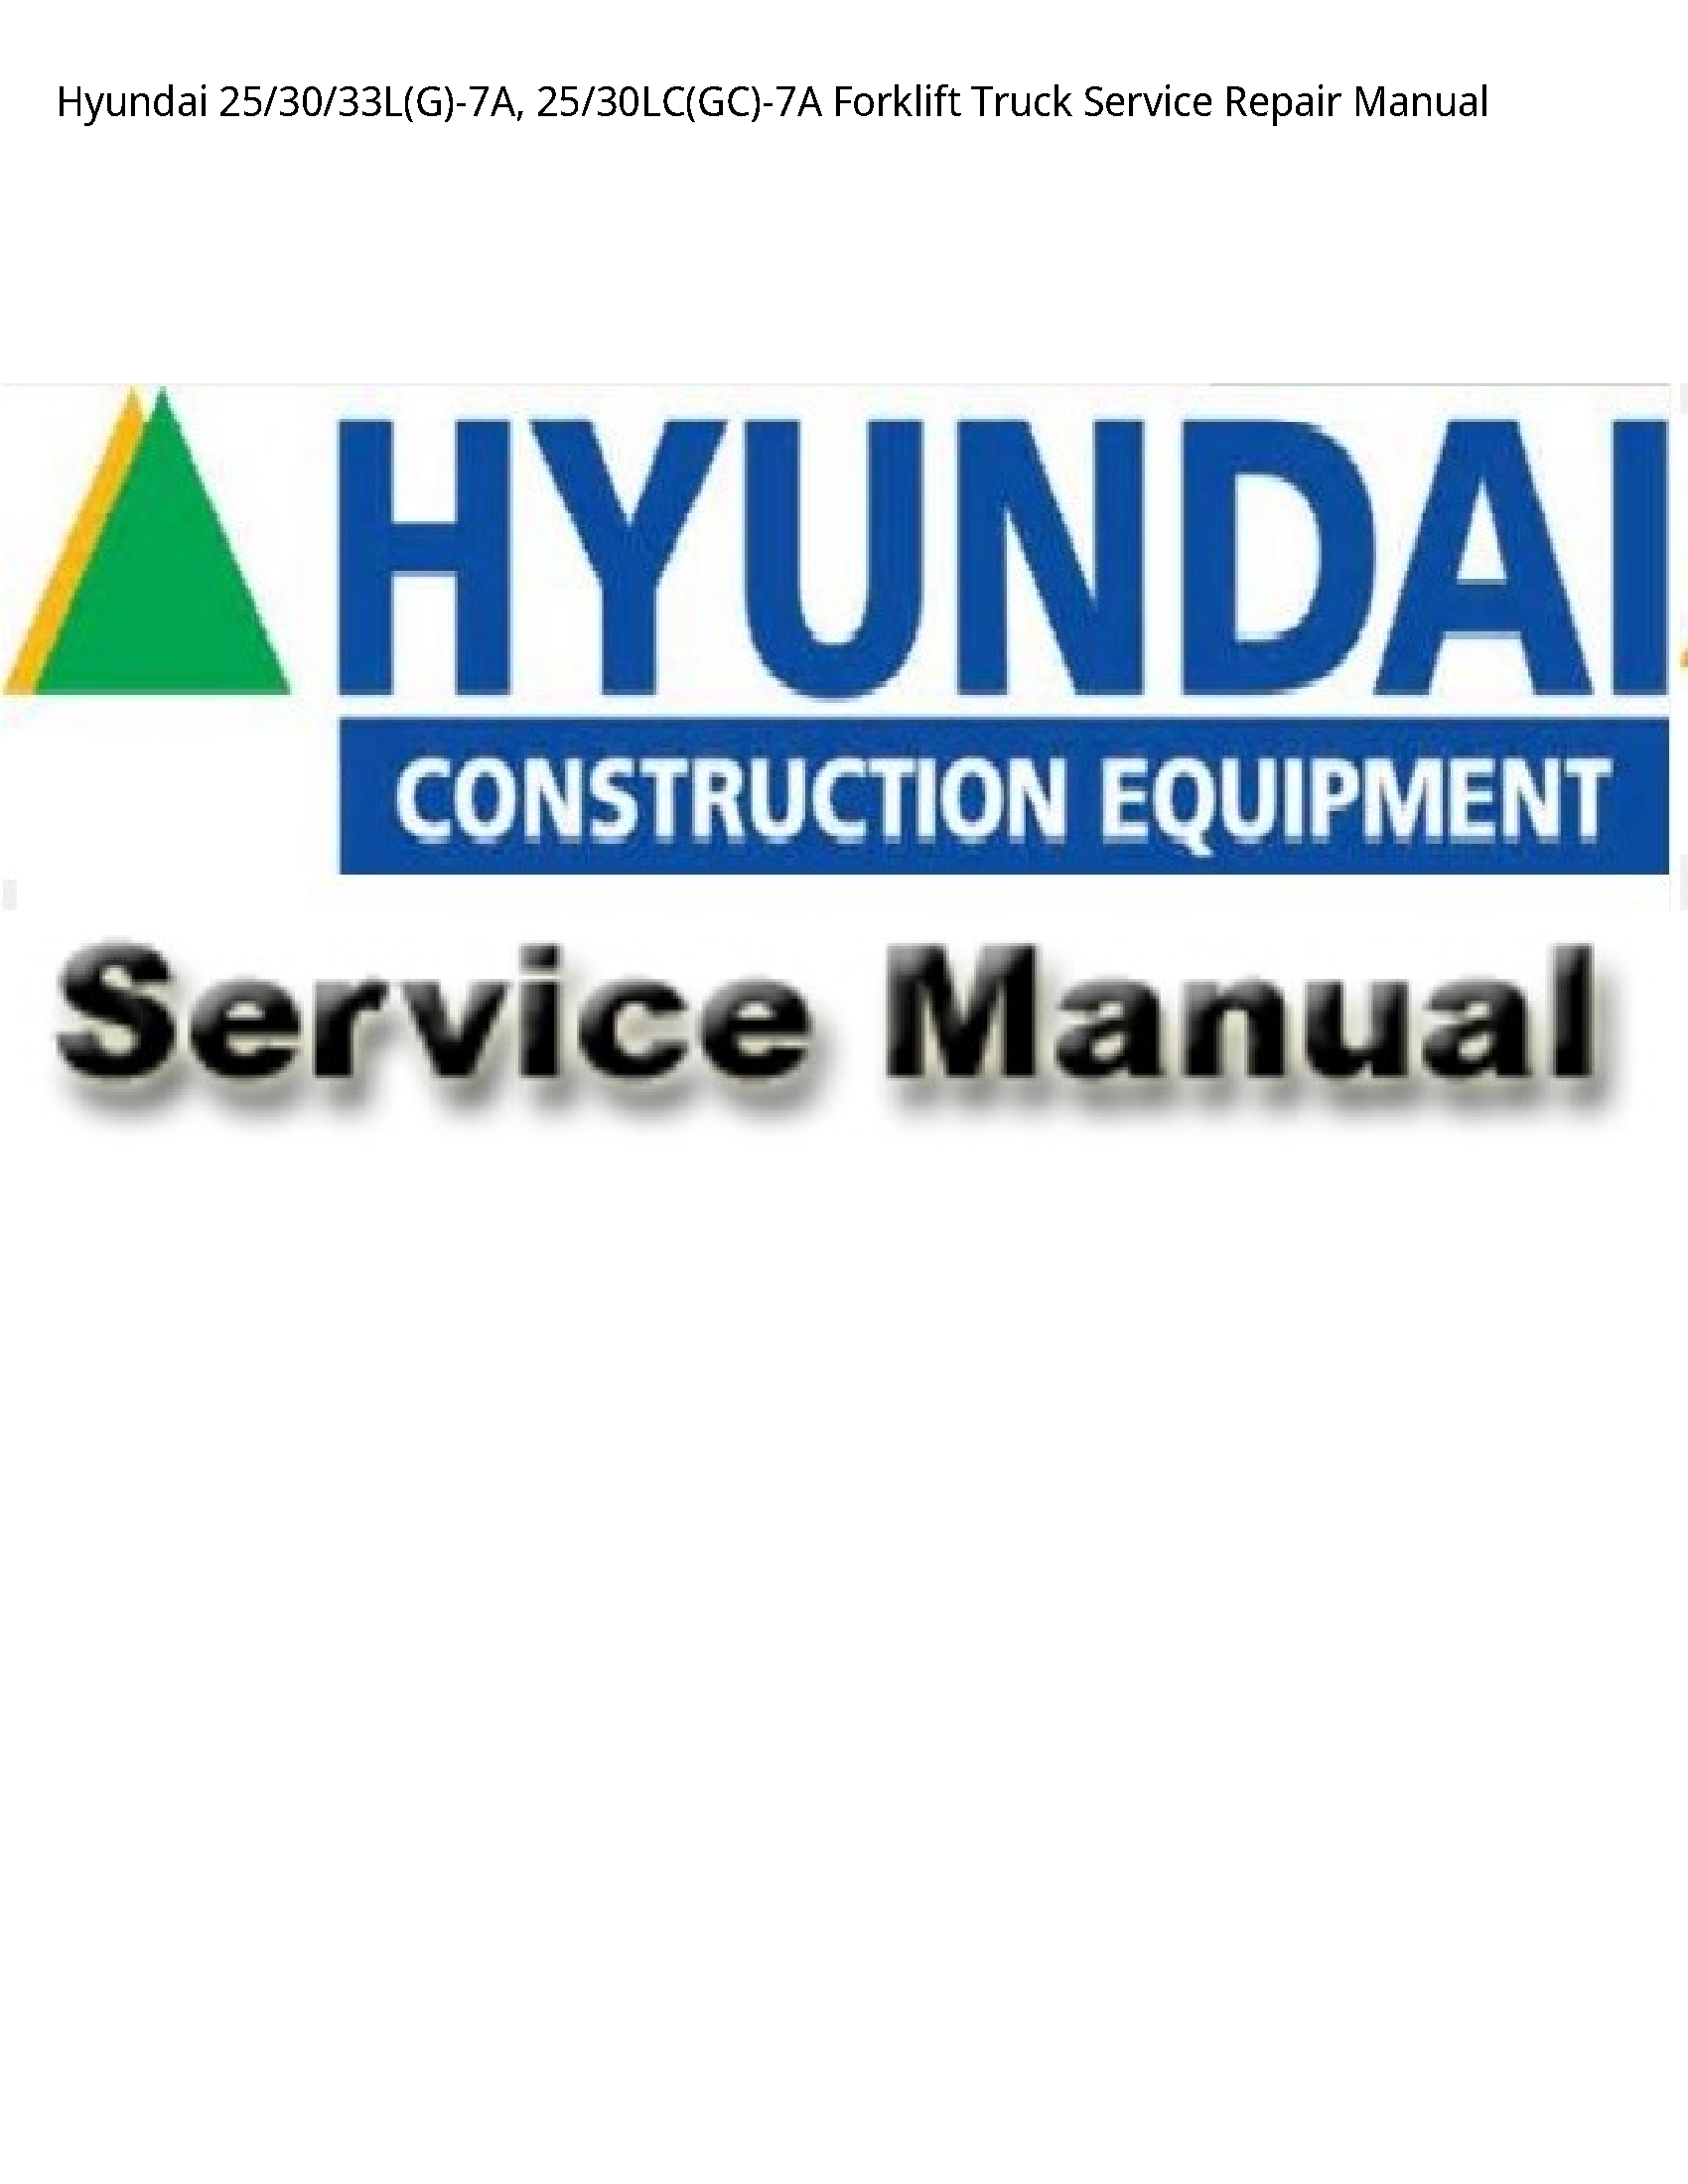 Hyundai 25/30/33L(G)-7A Forklift Truck manual